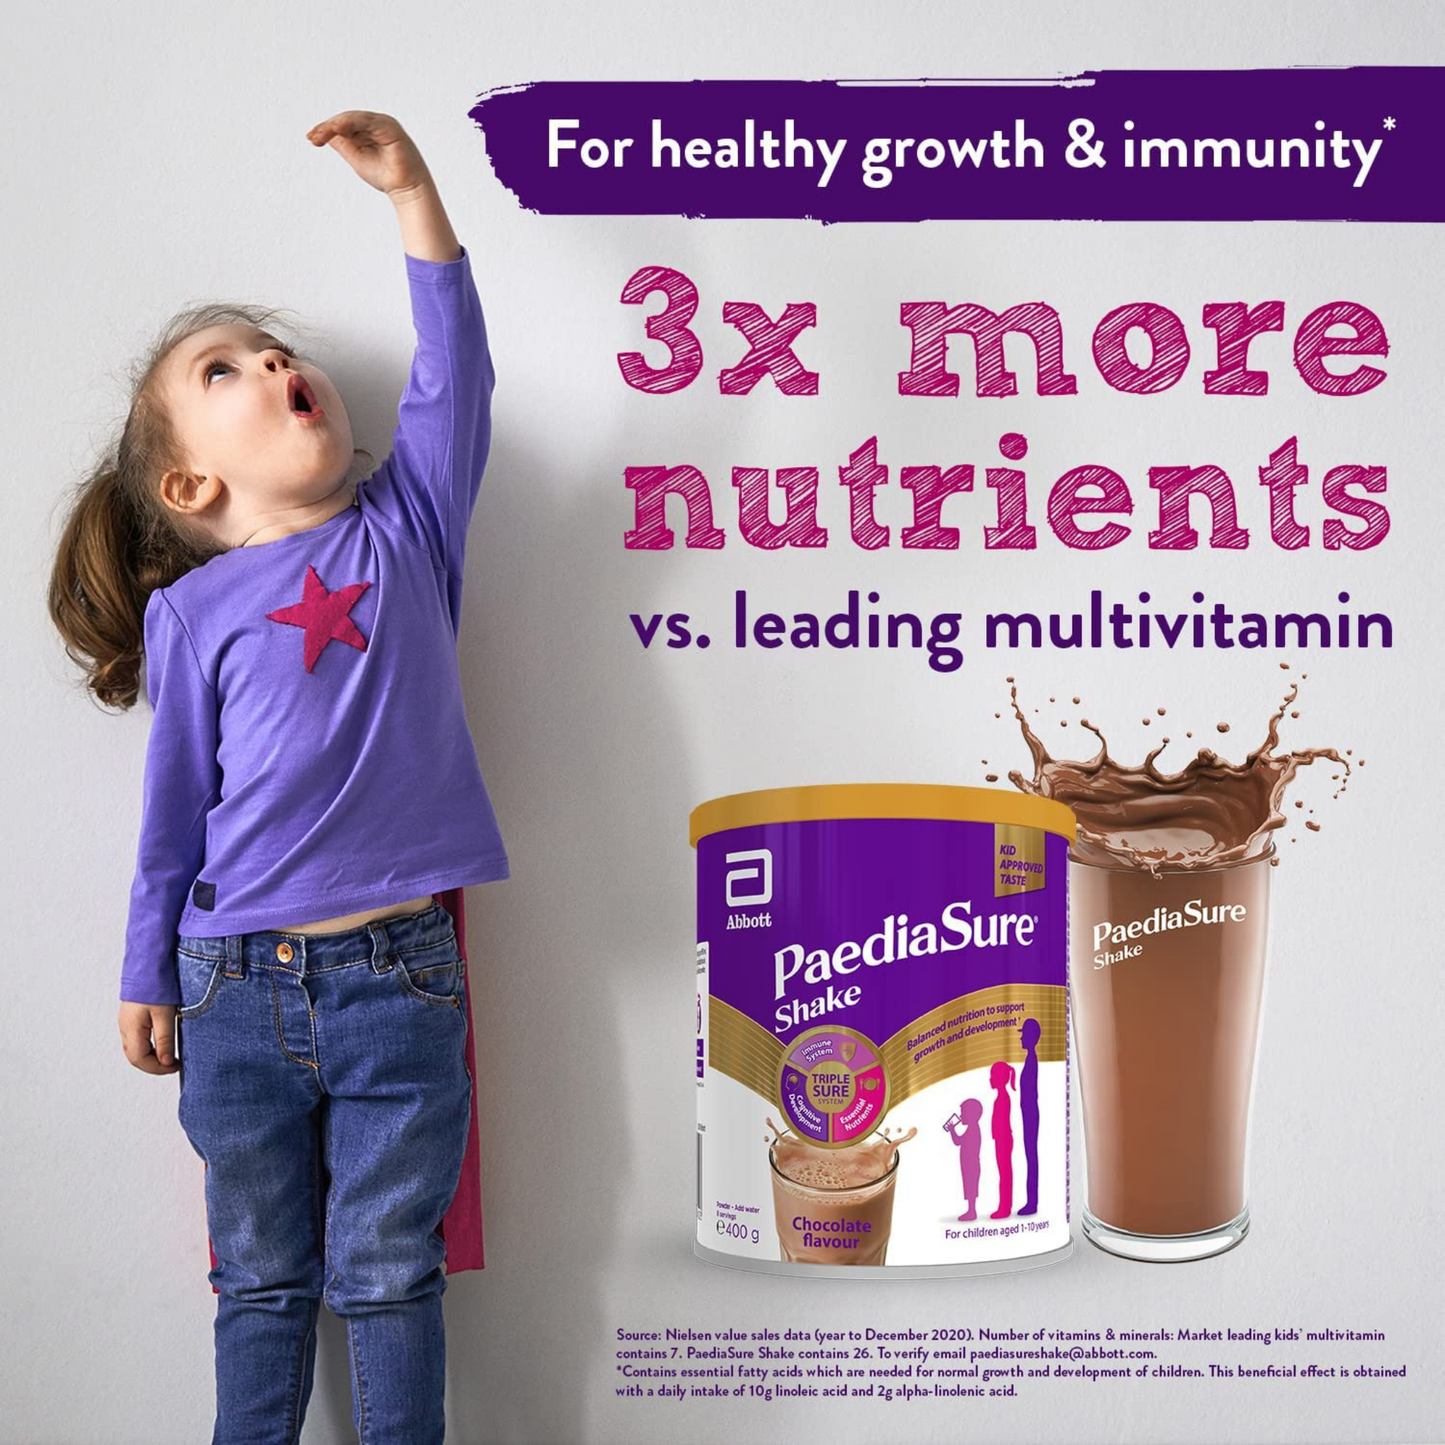 PaediaSure Shake Balanced Nutritional Multivitamin Supplement Drink for Kids Chocolate Flavour (UK) 400g